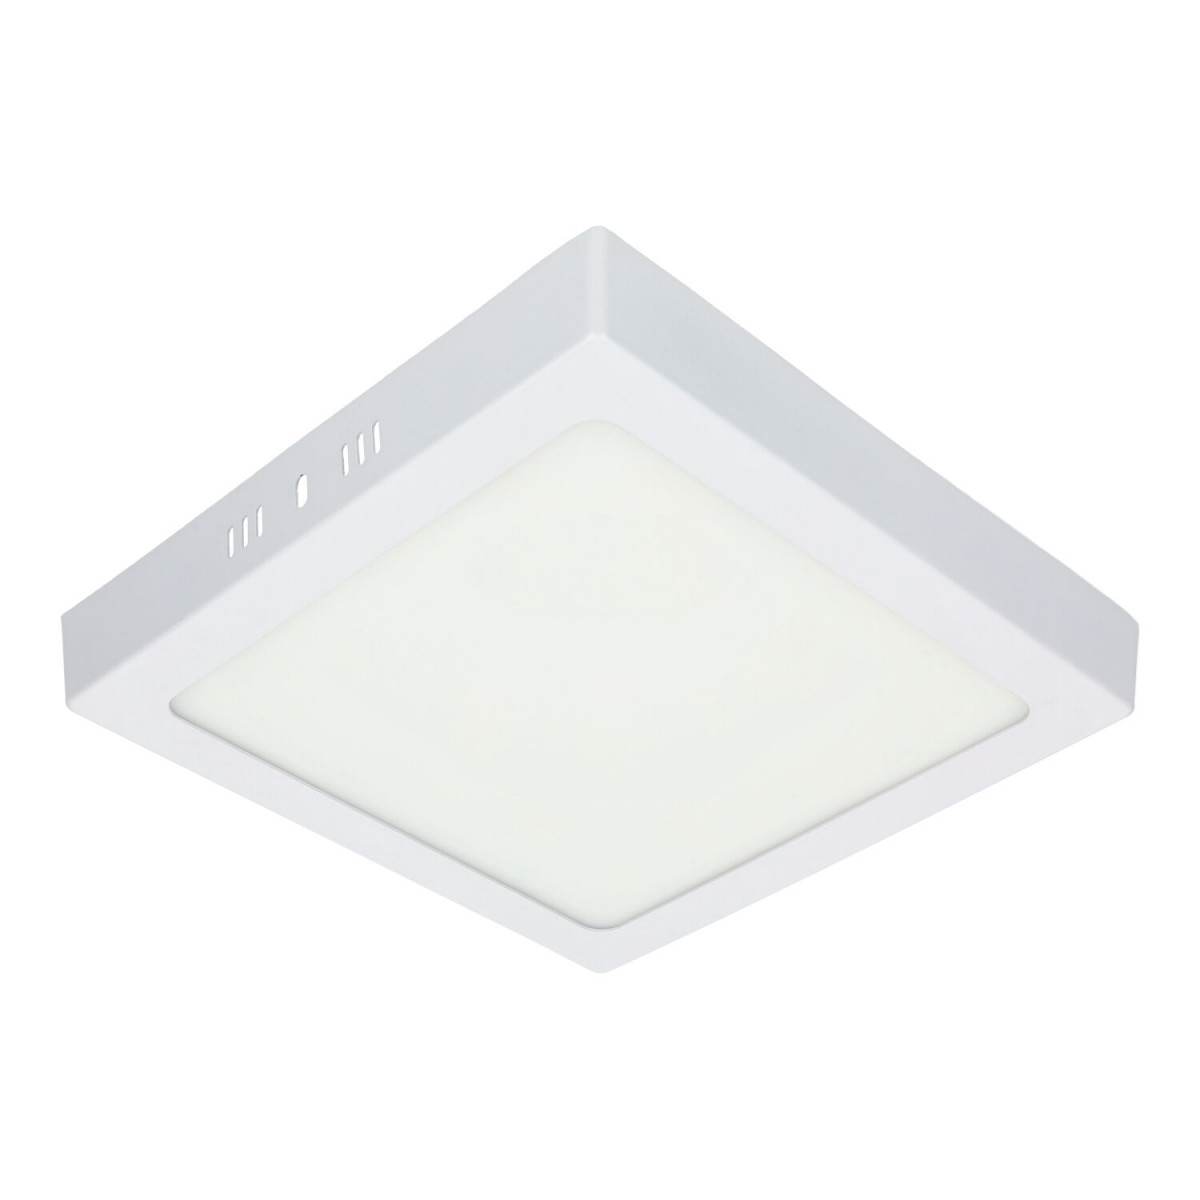 LED Ceiling Light - Square, 18W